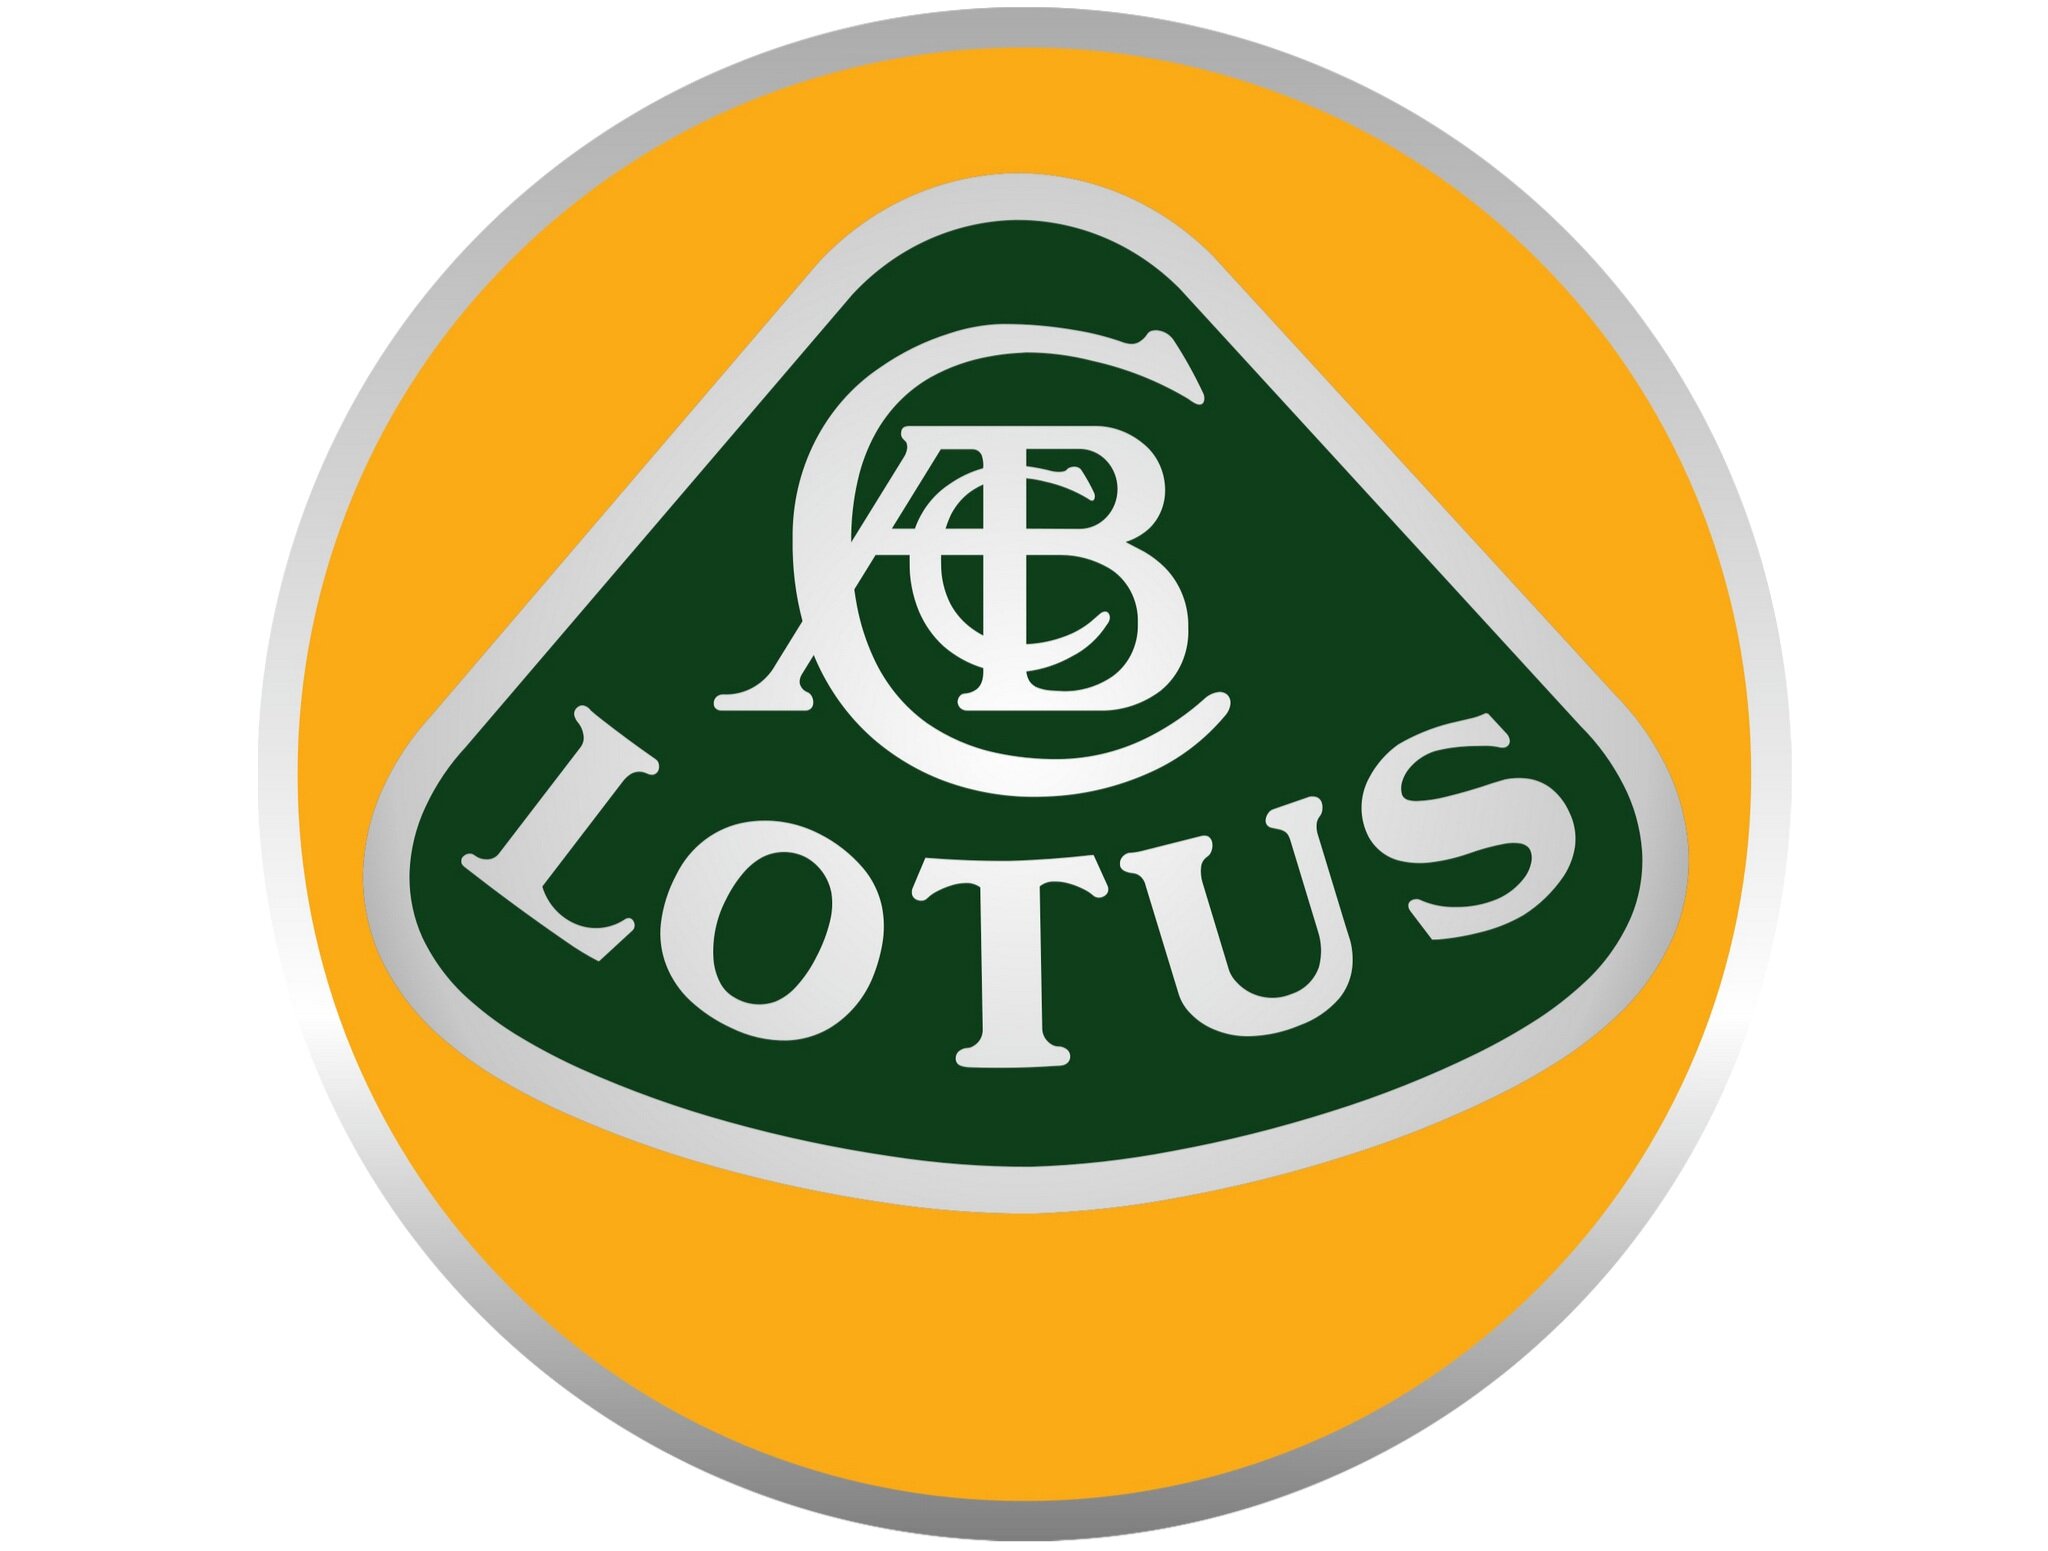 Lotus-symbol-2048x2048.jpg